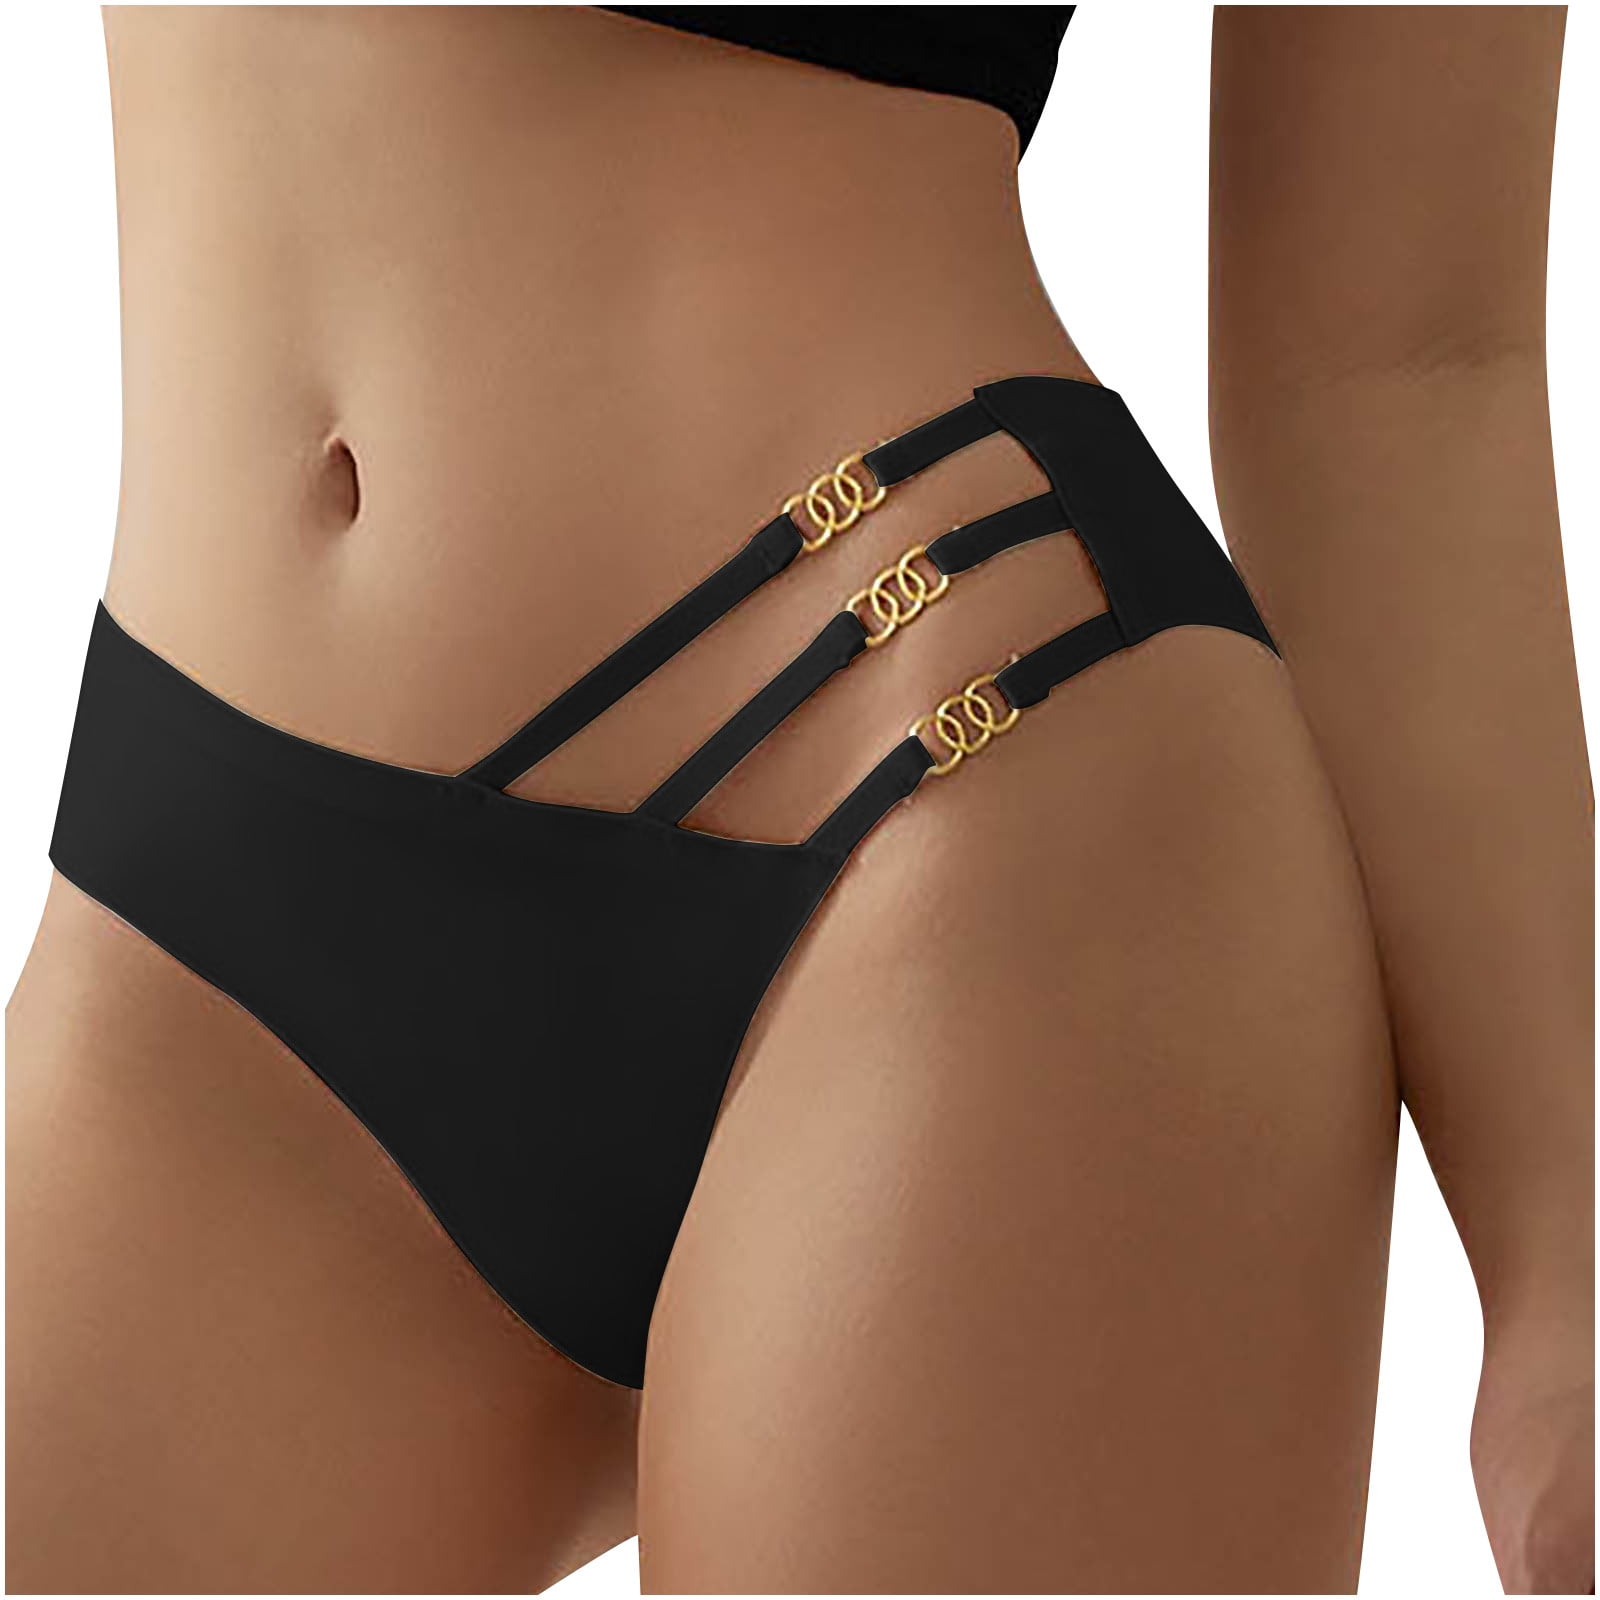 Women's Metal Chain Sexy Strap Thongs T Back G-string Underwear